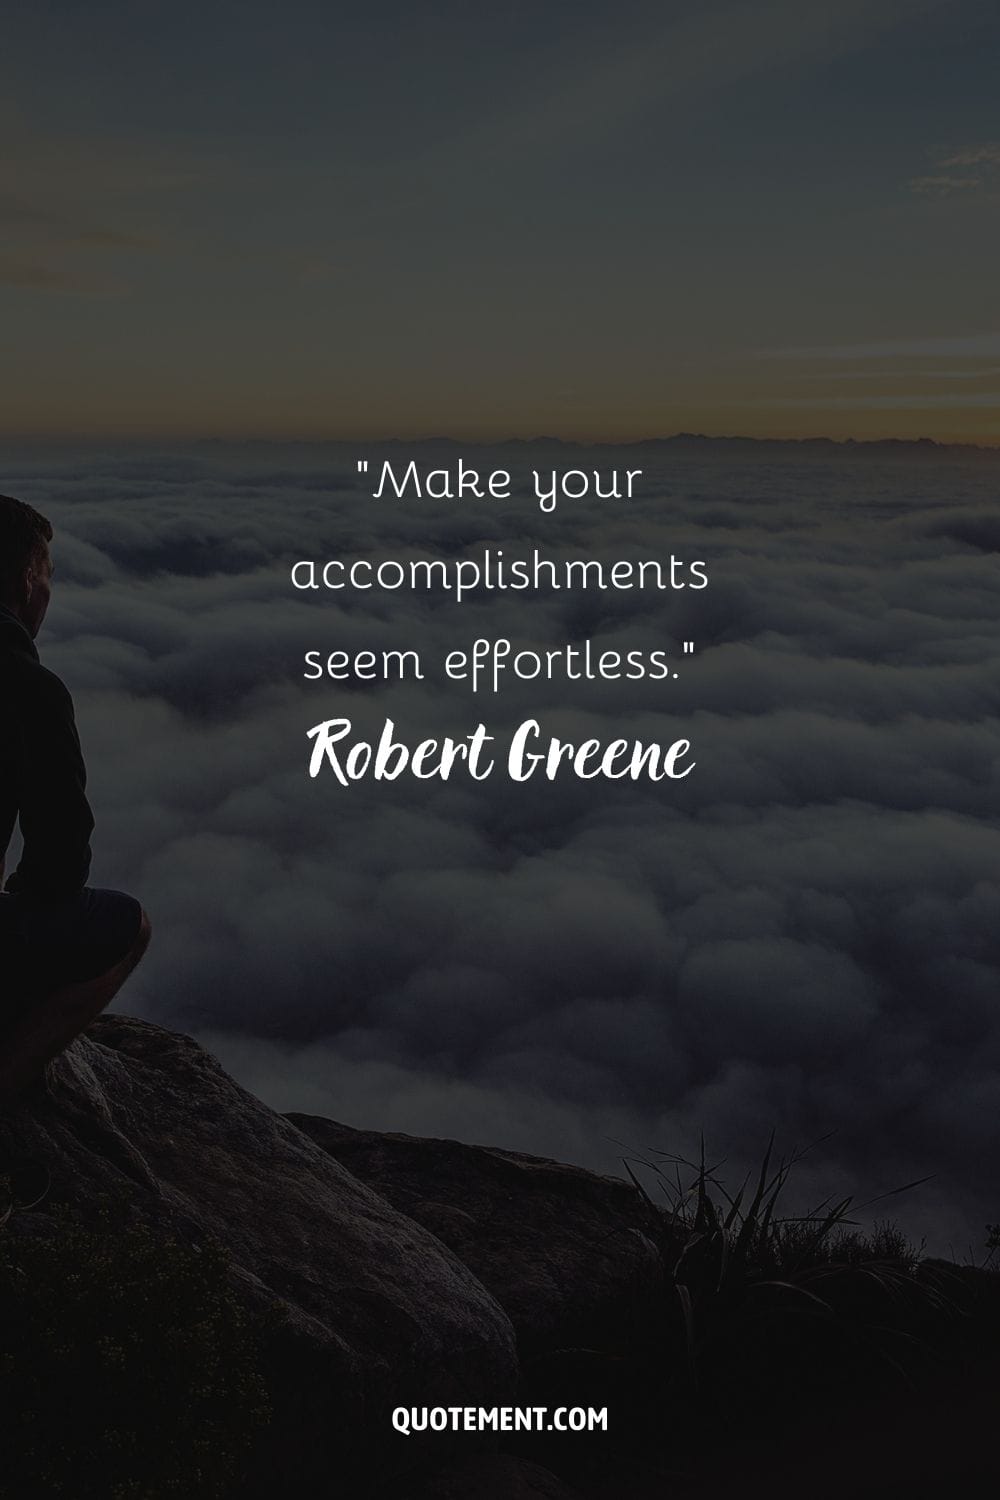 “Make your accomplishments seem effortless.” ― Robert Greene, The 48 Laws of Power